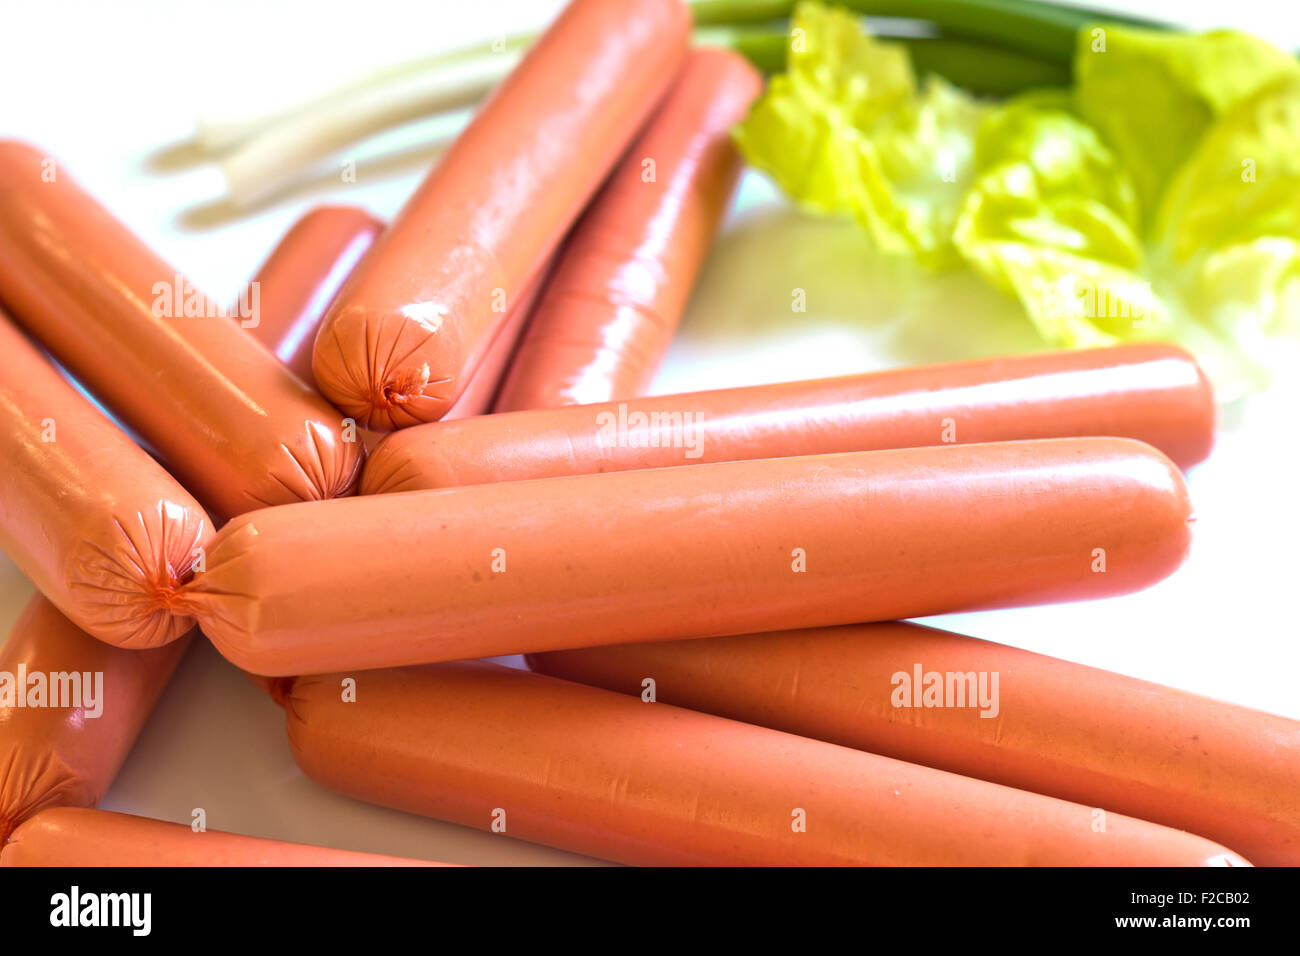 Raw hot dog Stock Photo